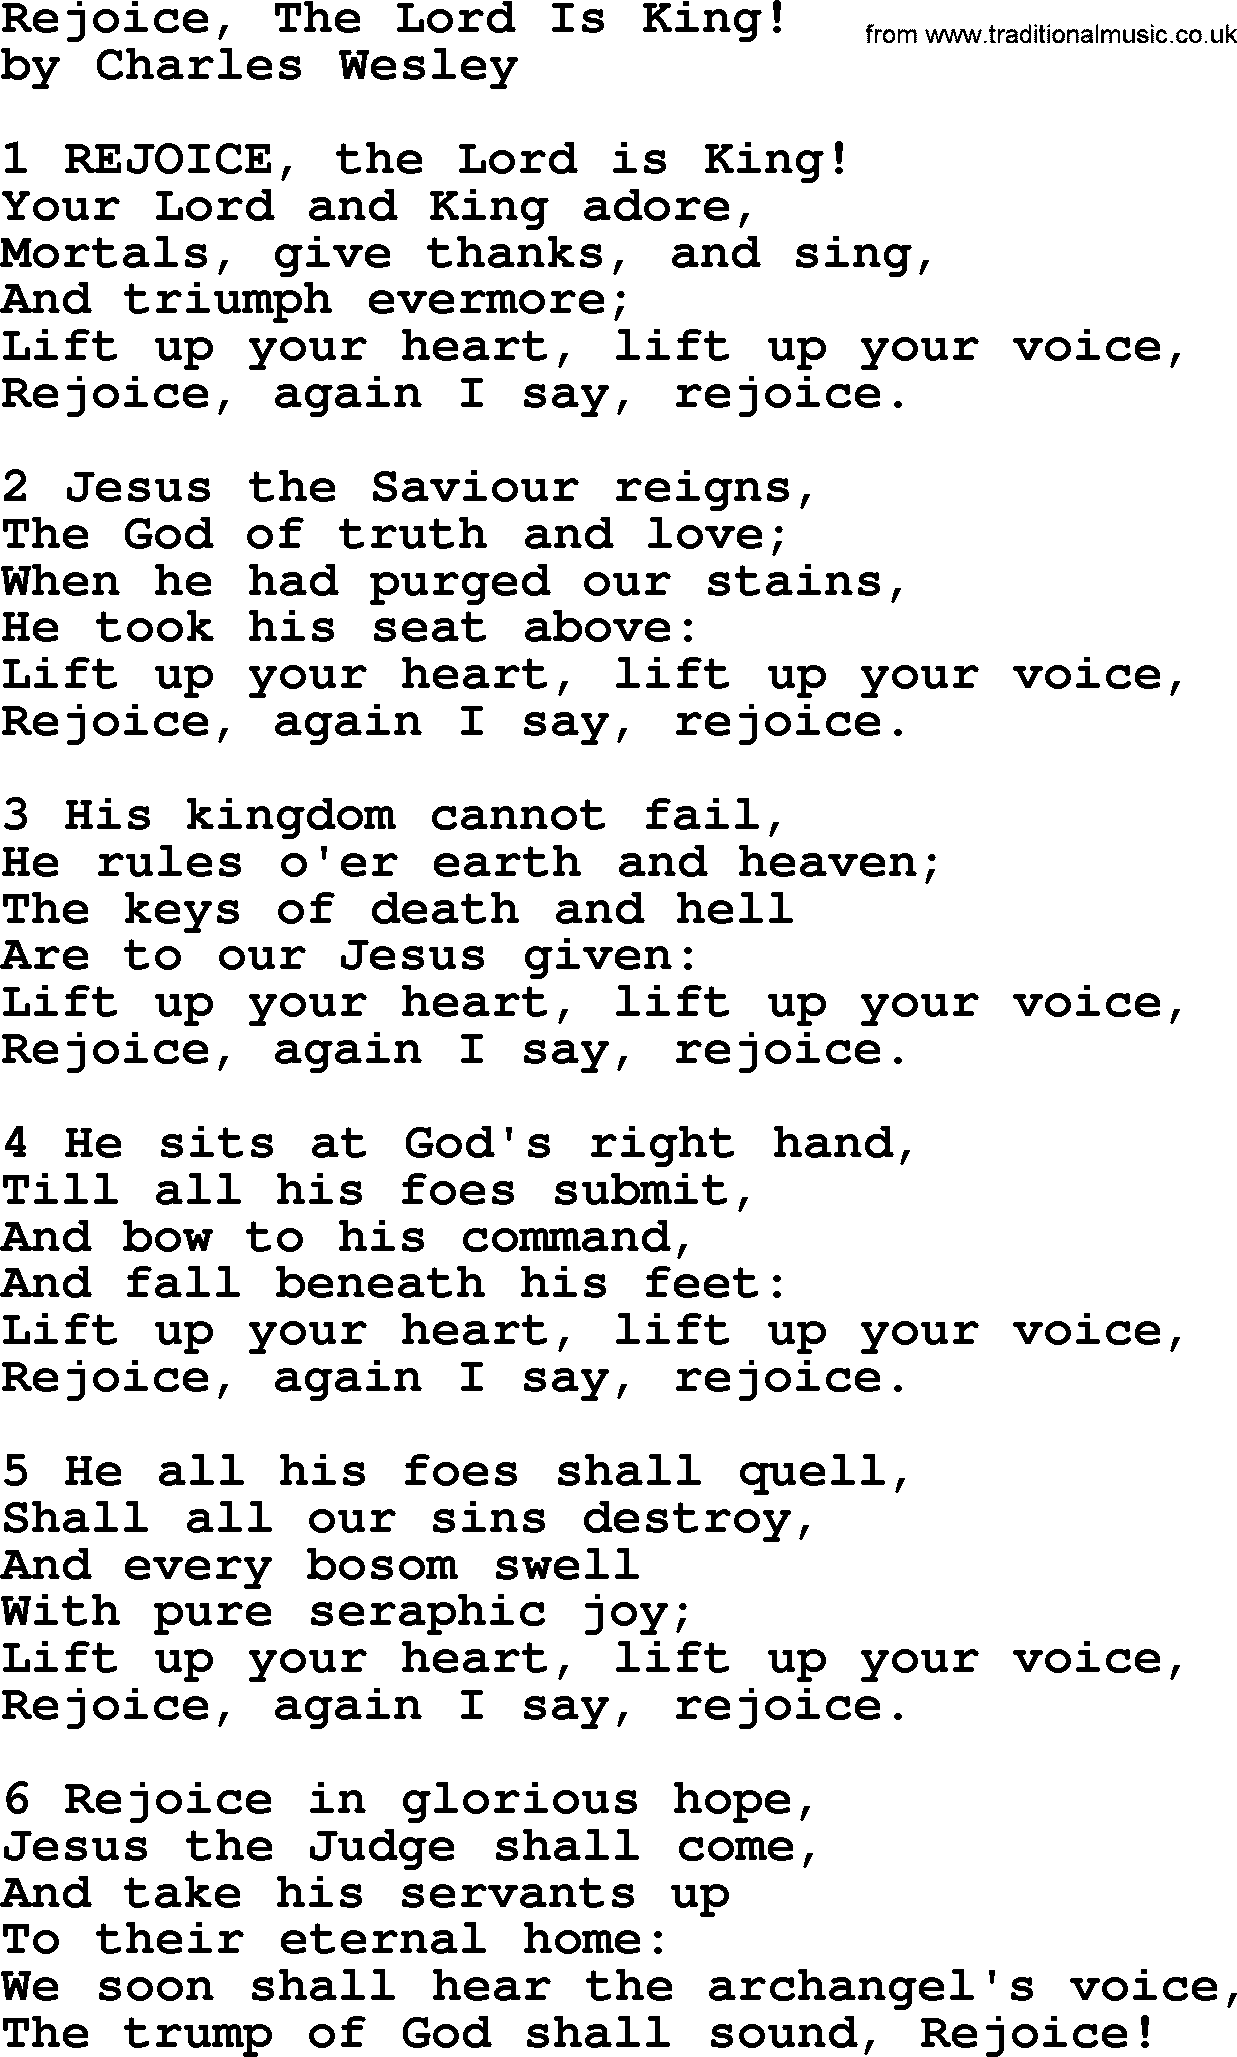 Charles Wesley hymn: Rejoice, The Lord Is King!, lyrics